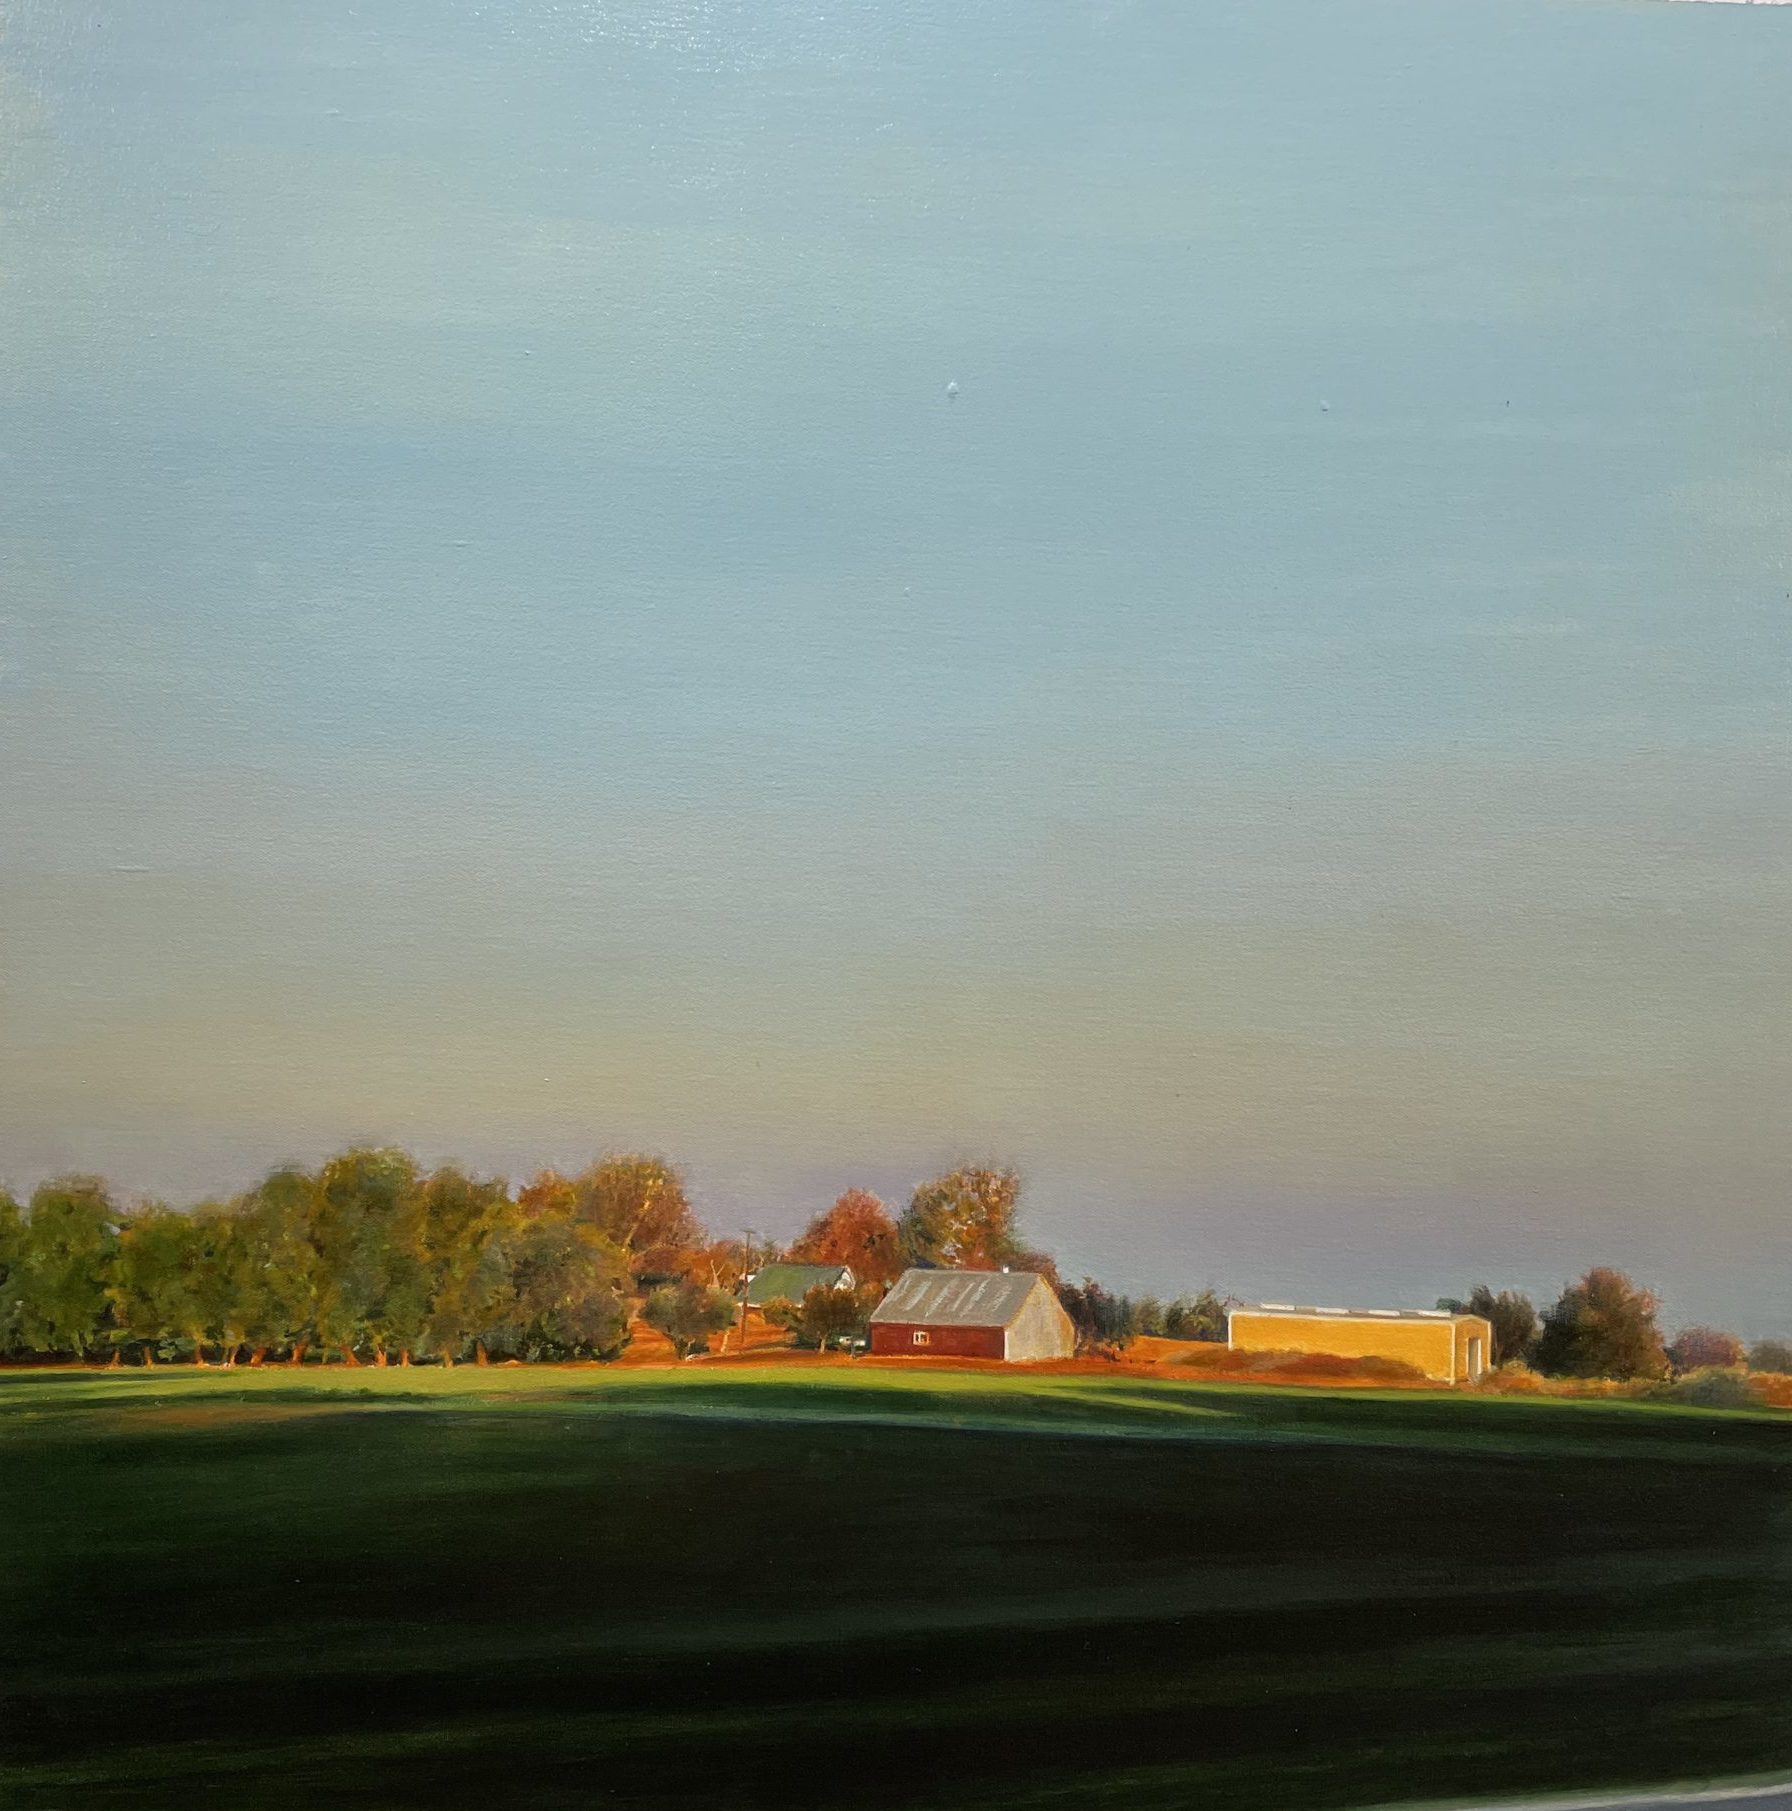 Rachel Kline, Farm at Sunset, Oil on canvas, 24"x24", VALUE: $2100, STARTING BID: $700